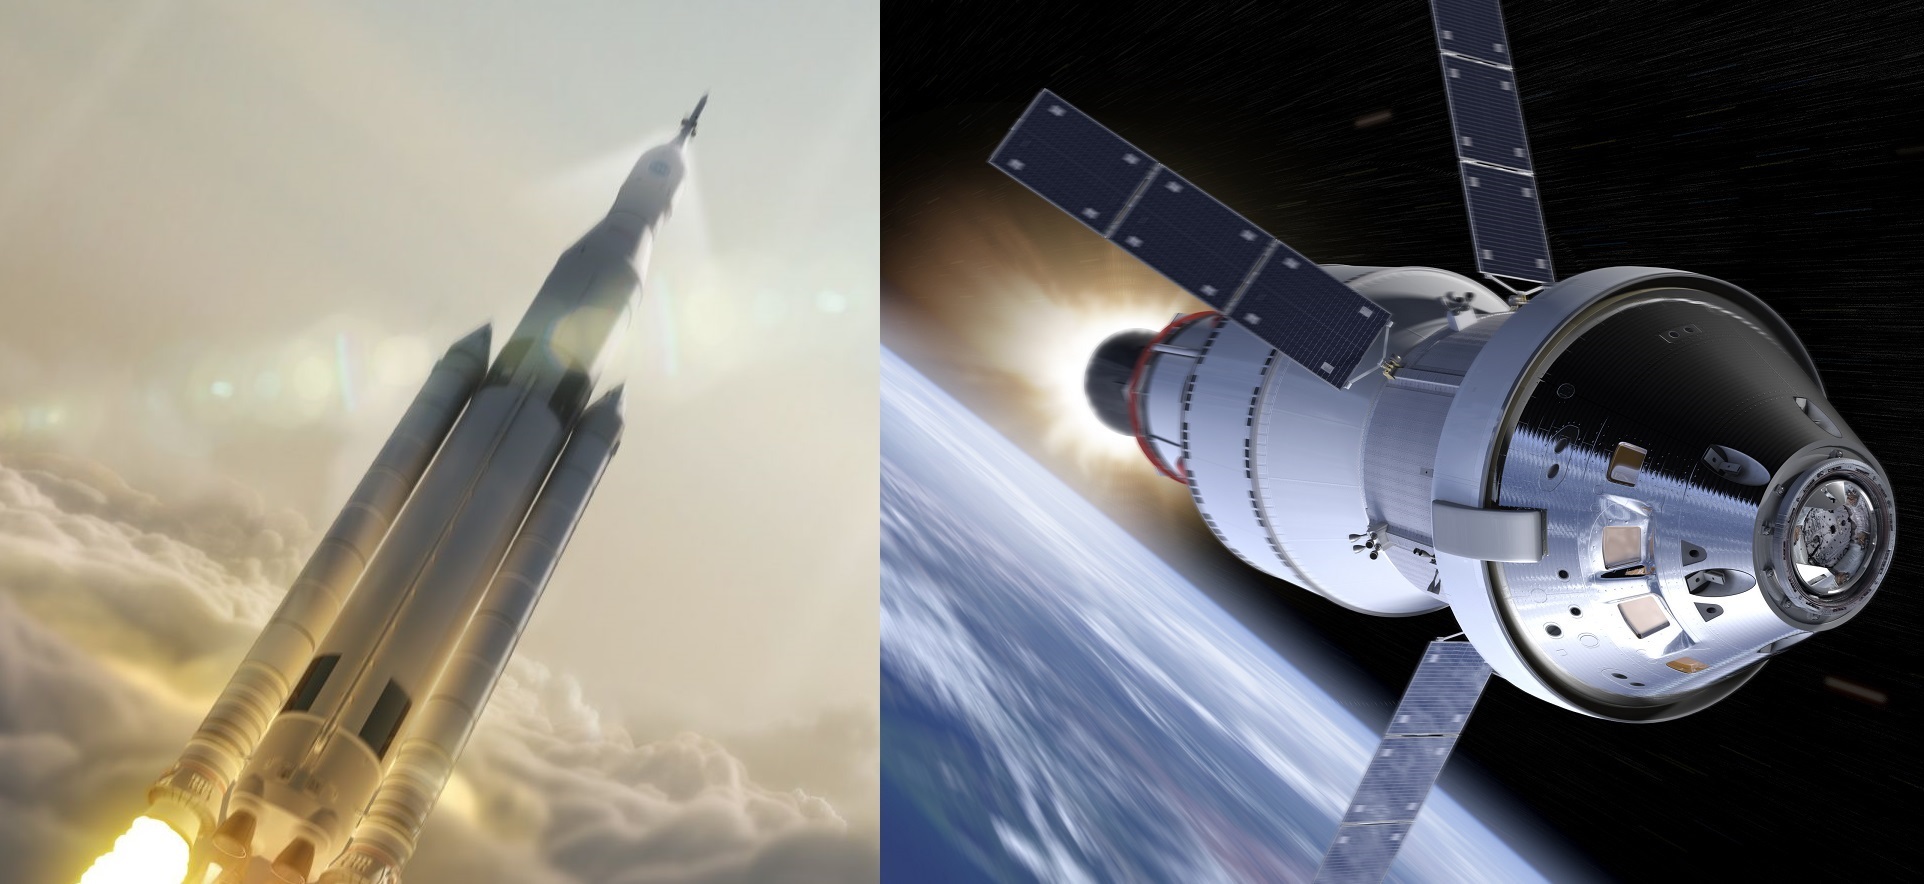 NASA spends $16.7 billion on Orion spacecraft - Space, Boeing, Orion, Cosmonautics, Artemis, Lockheed Martin, NASA, Spaceship, Boeing, Artemis (space program)